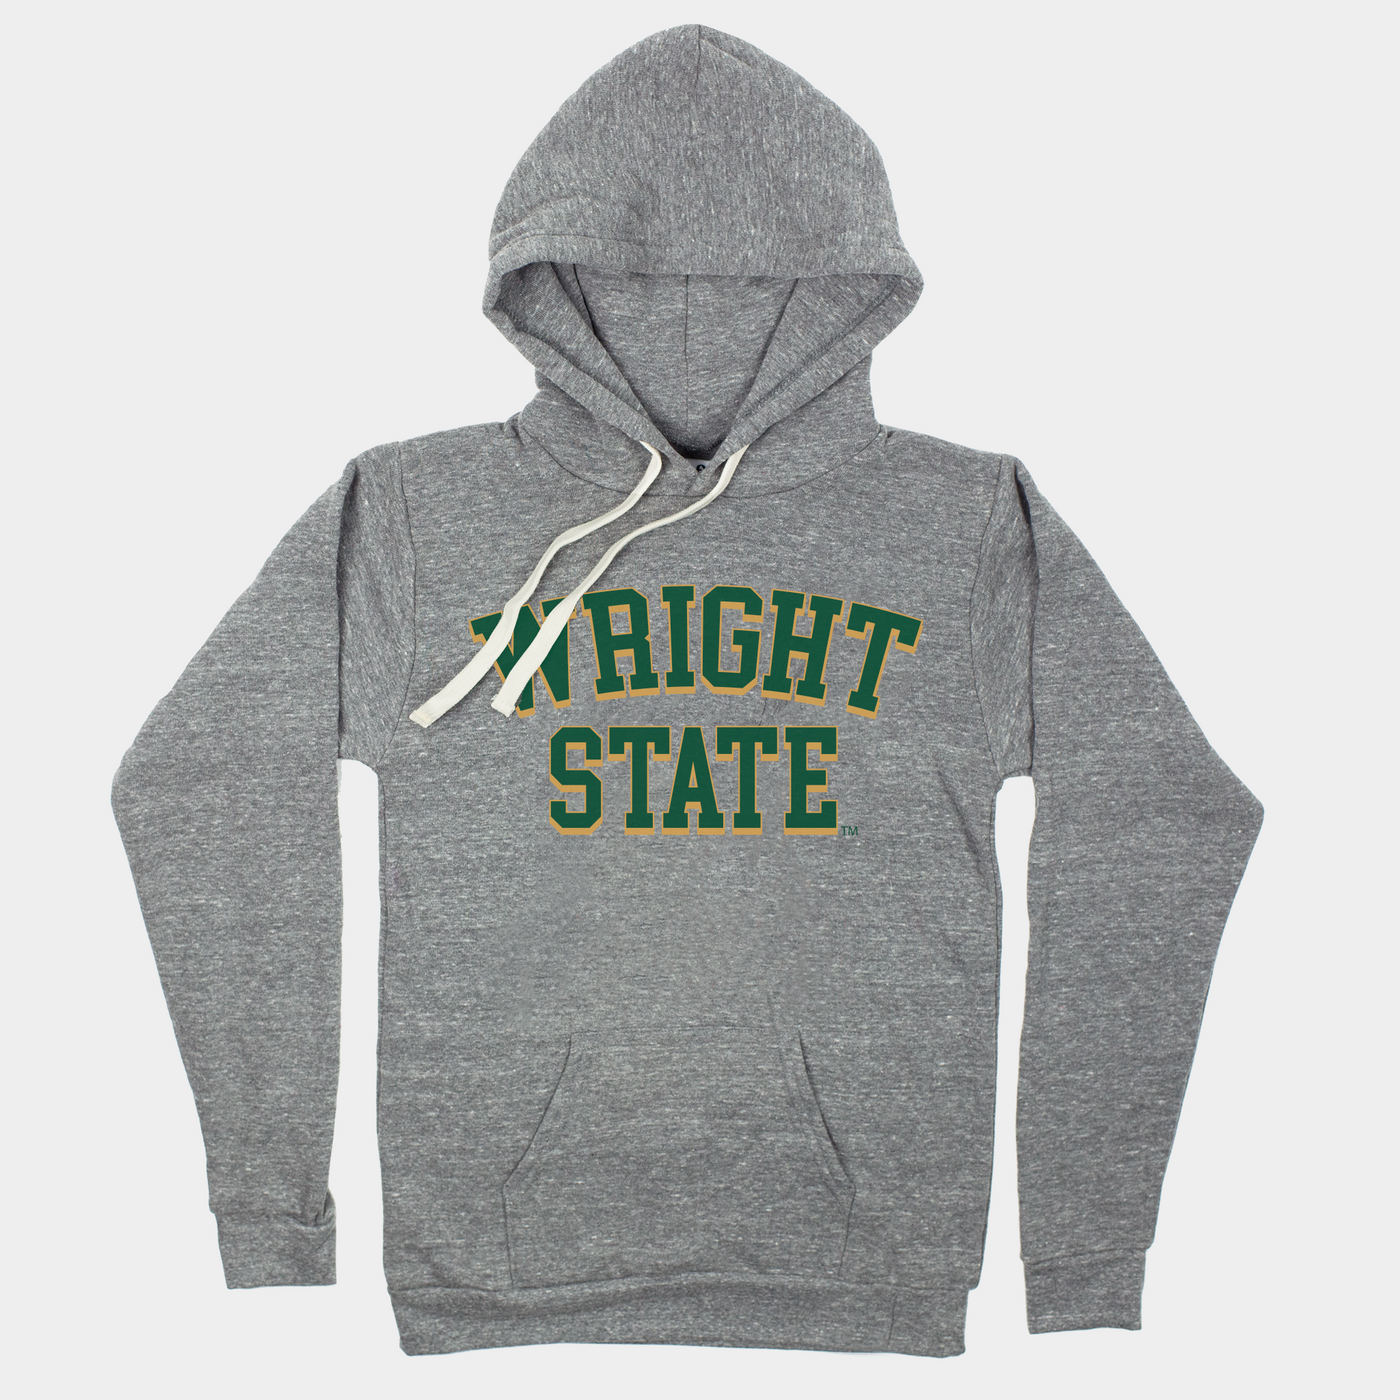 Wright State Hoodie Sweatshirt